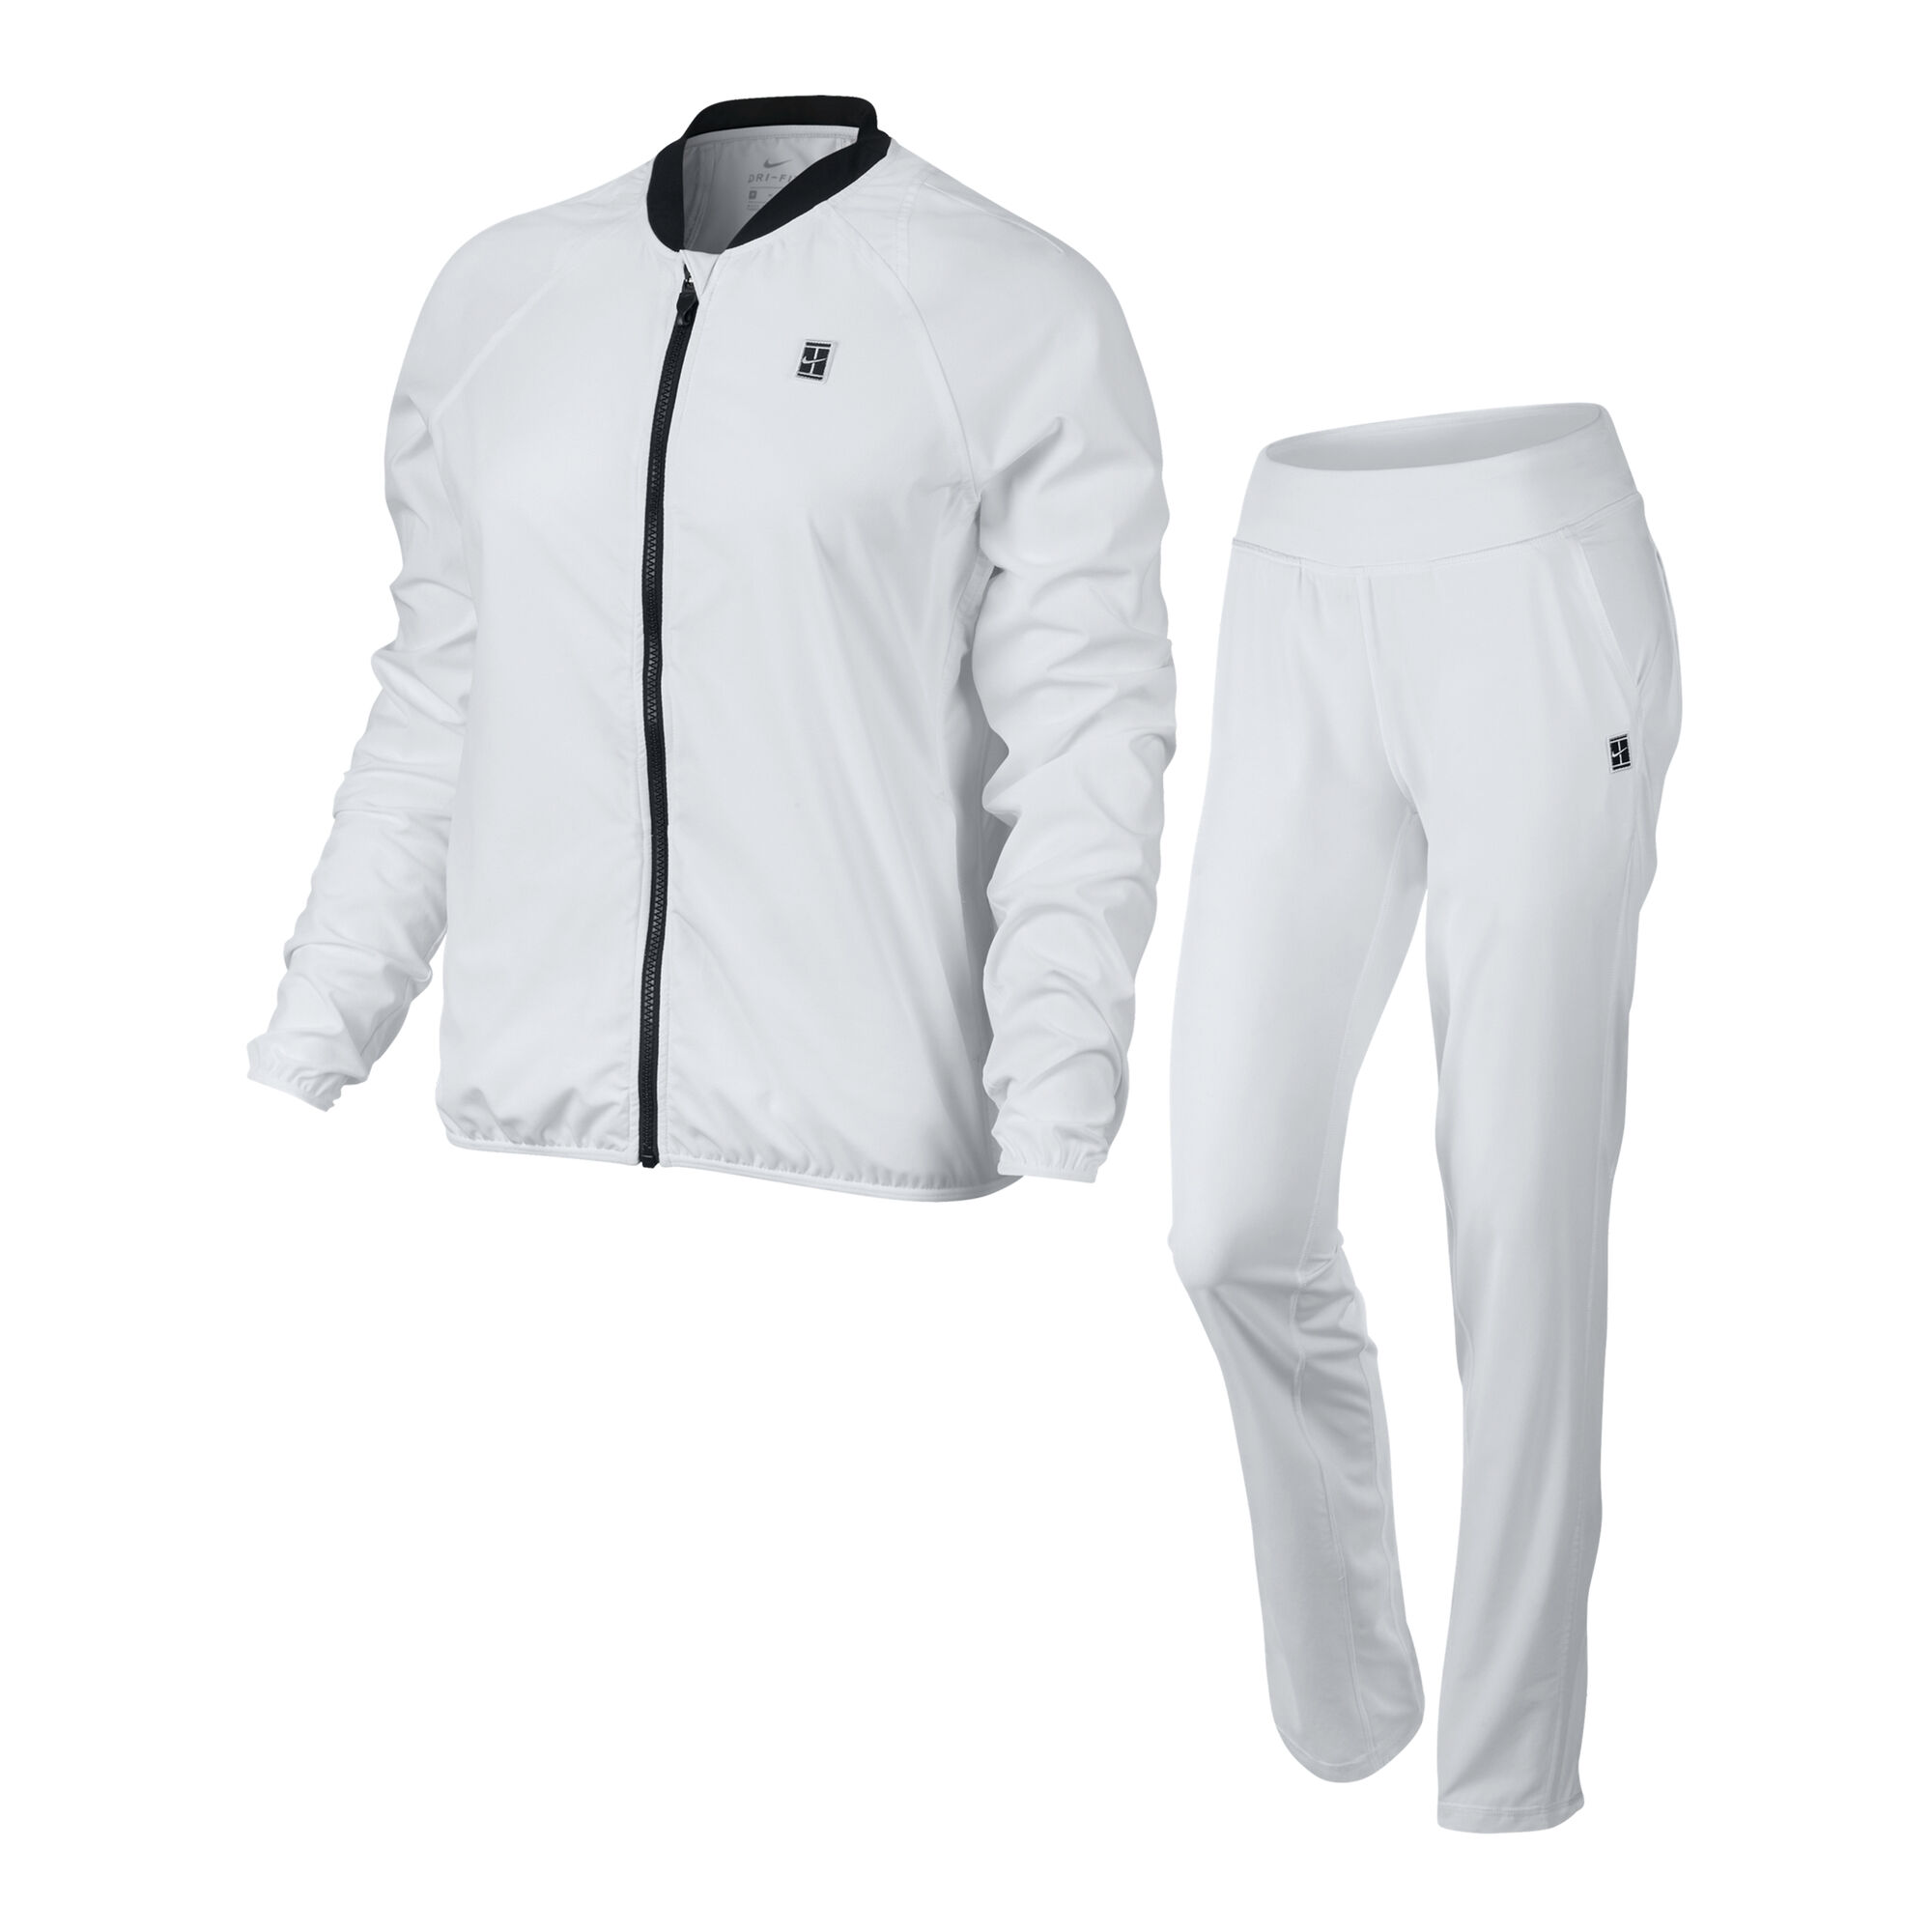 Rode datum Ritmisch Geweldig Nike Court Woven Warm Up Trainingspak Dames - Wit, Zwart online kopen |  Tennis-Point